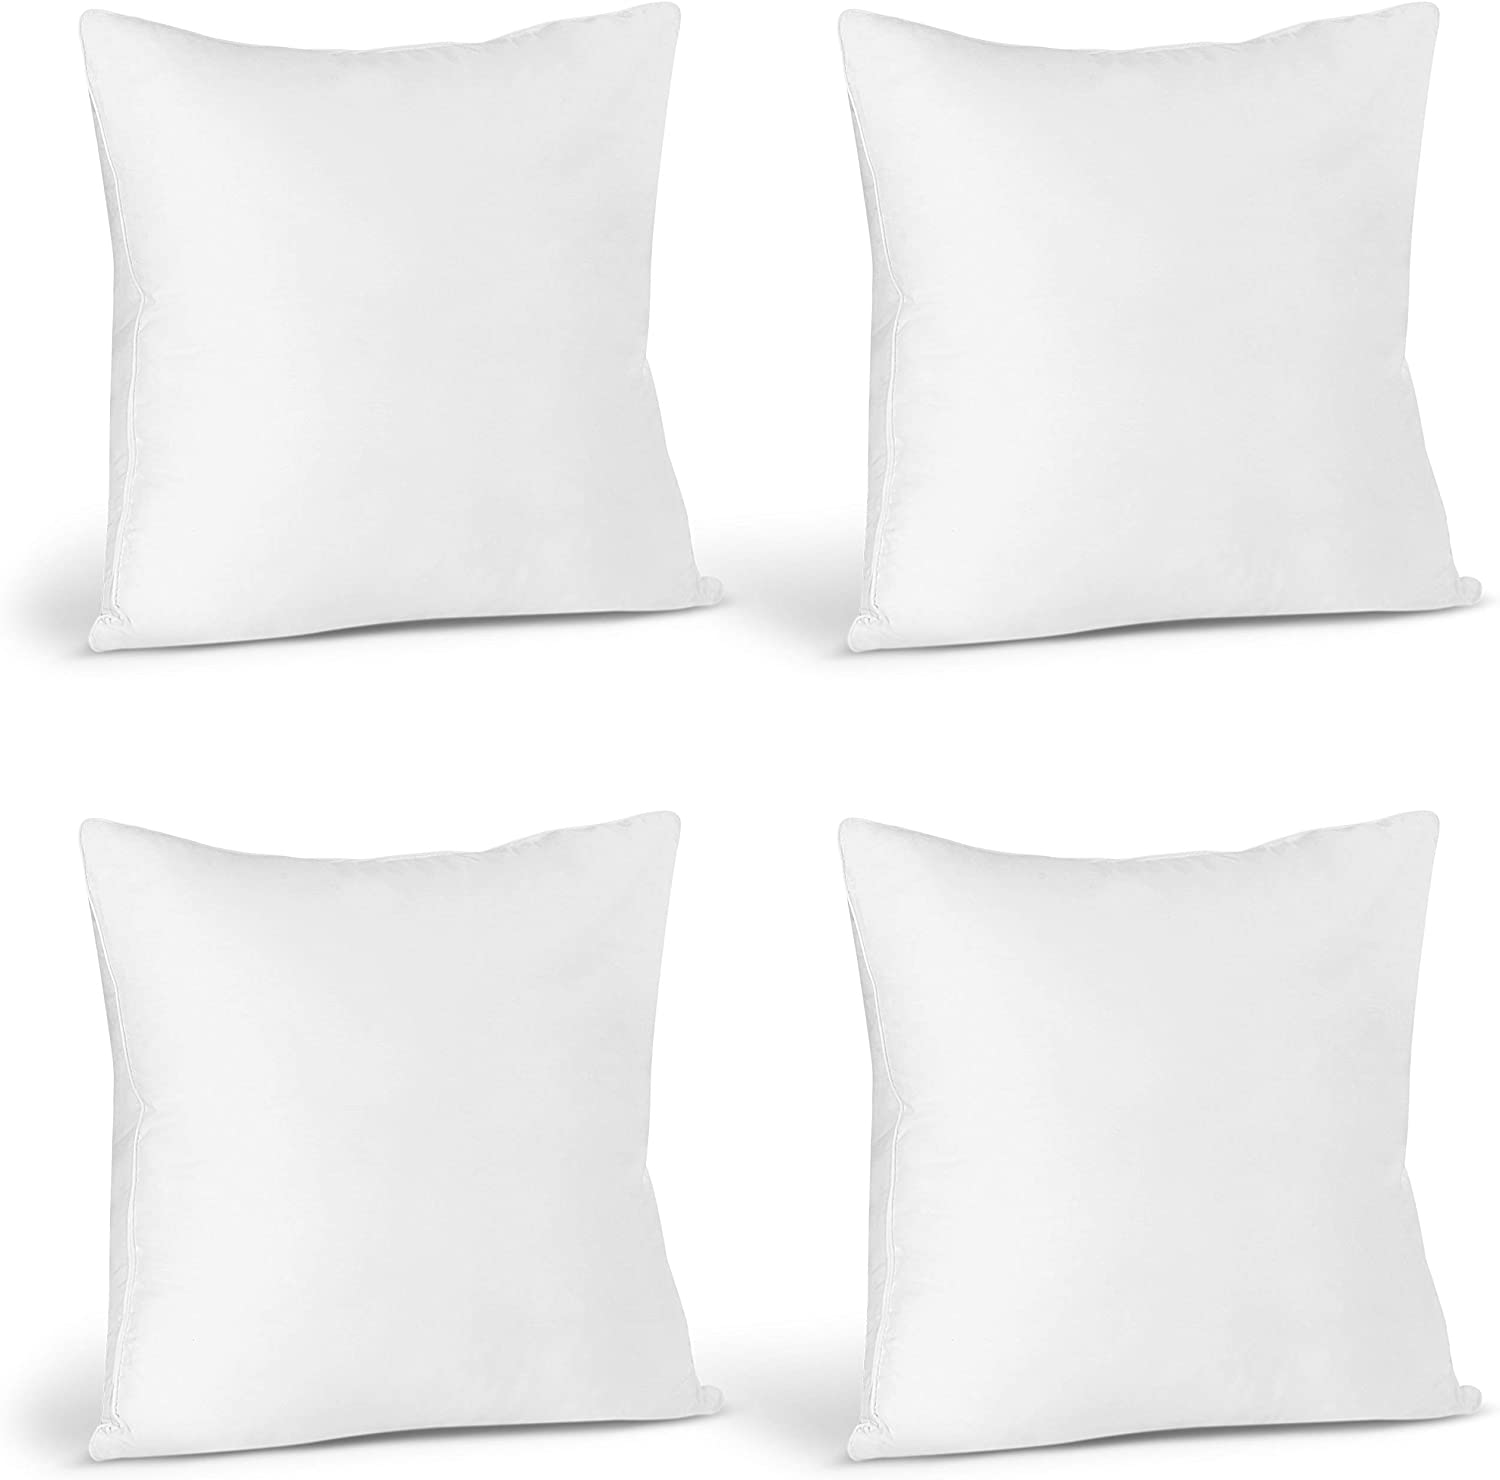 https://www.dontwasteyourmoney.com/wp-content/uploads/2020/09/utopia-bedding-throw-pillow-inserts-4-pack-pillow-inserts.jpg